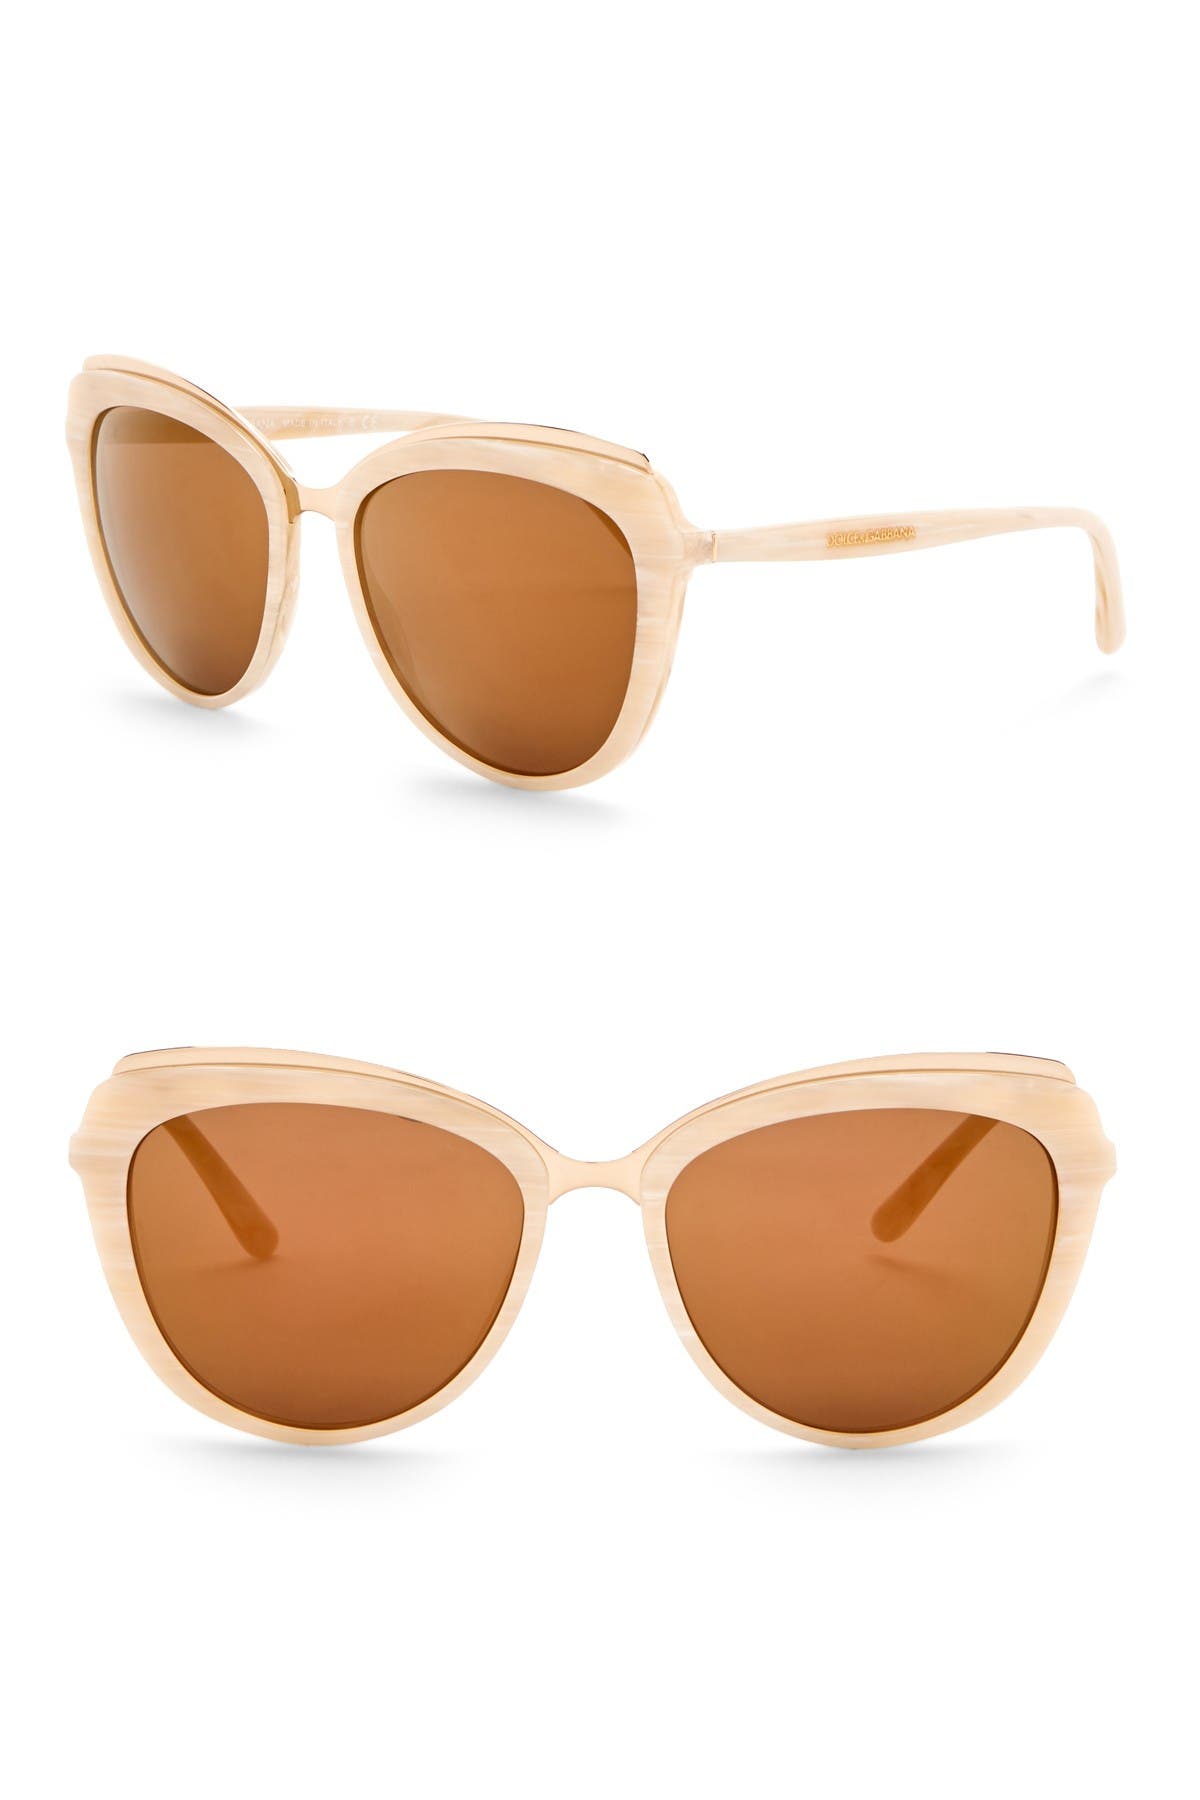 nordstrom rack dolce and gabbana sunglasses